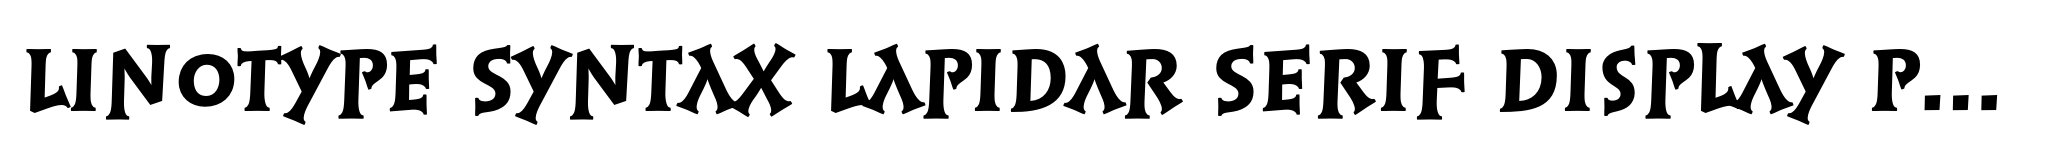 Linotype Syntax Lapidar Serif Display Pro Heavy image